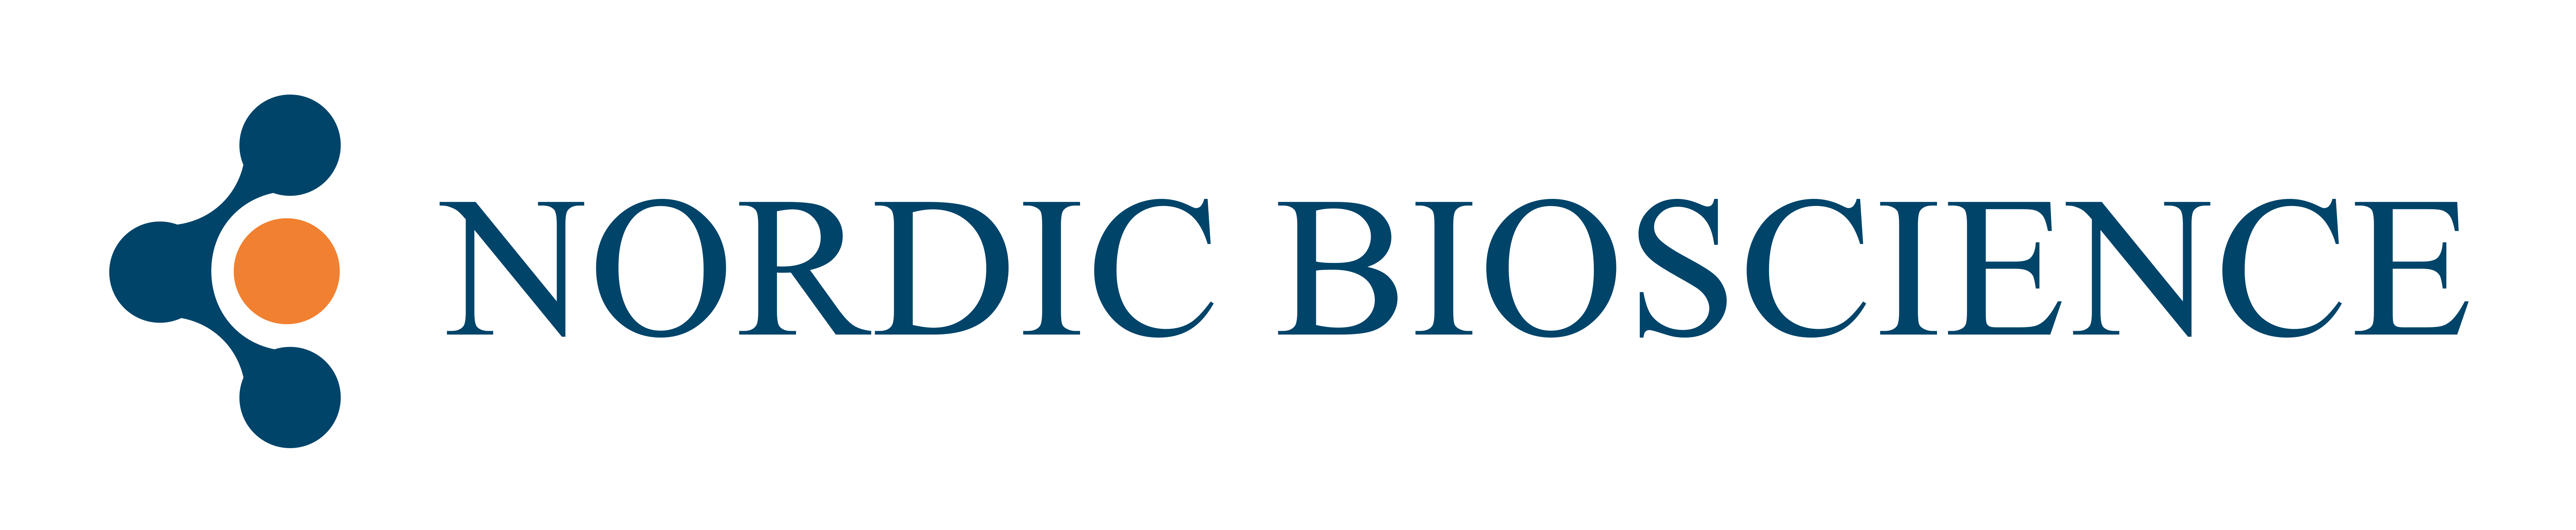 Logo_Nordic_Bioscience_HighRes4